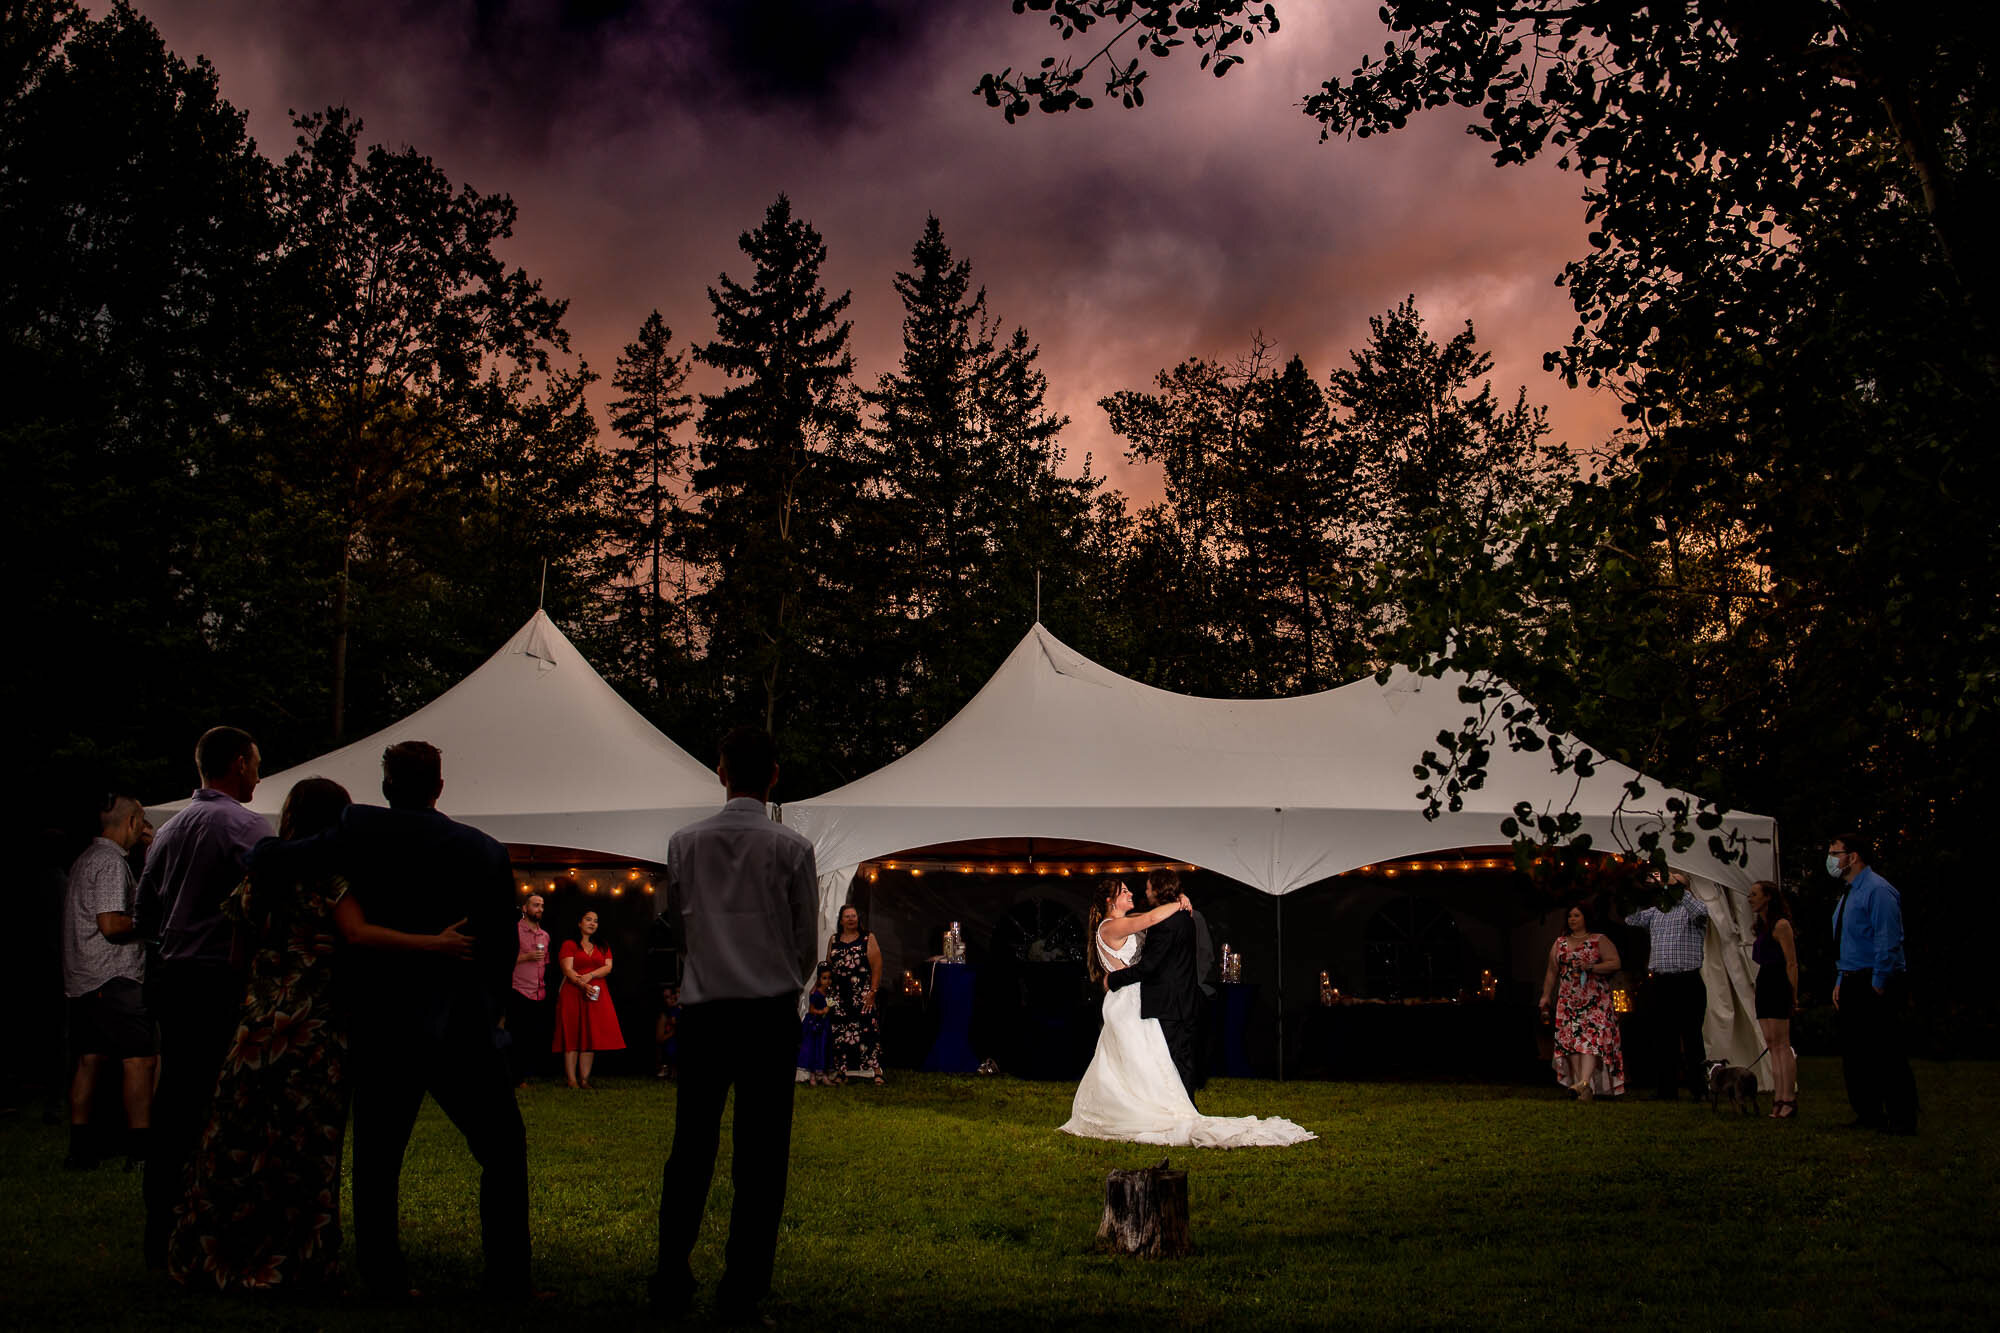 backyeard-jewish-outdoor-wedding-ceremony-42.jpg